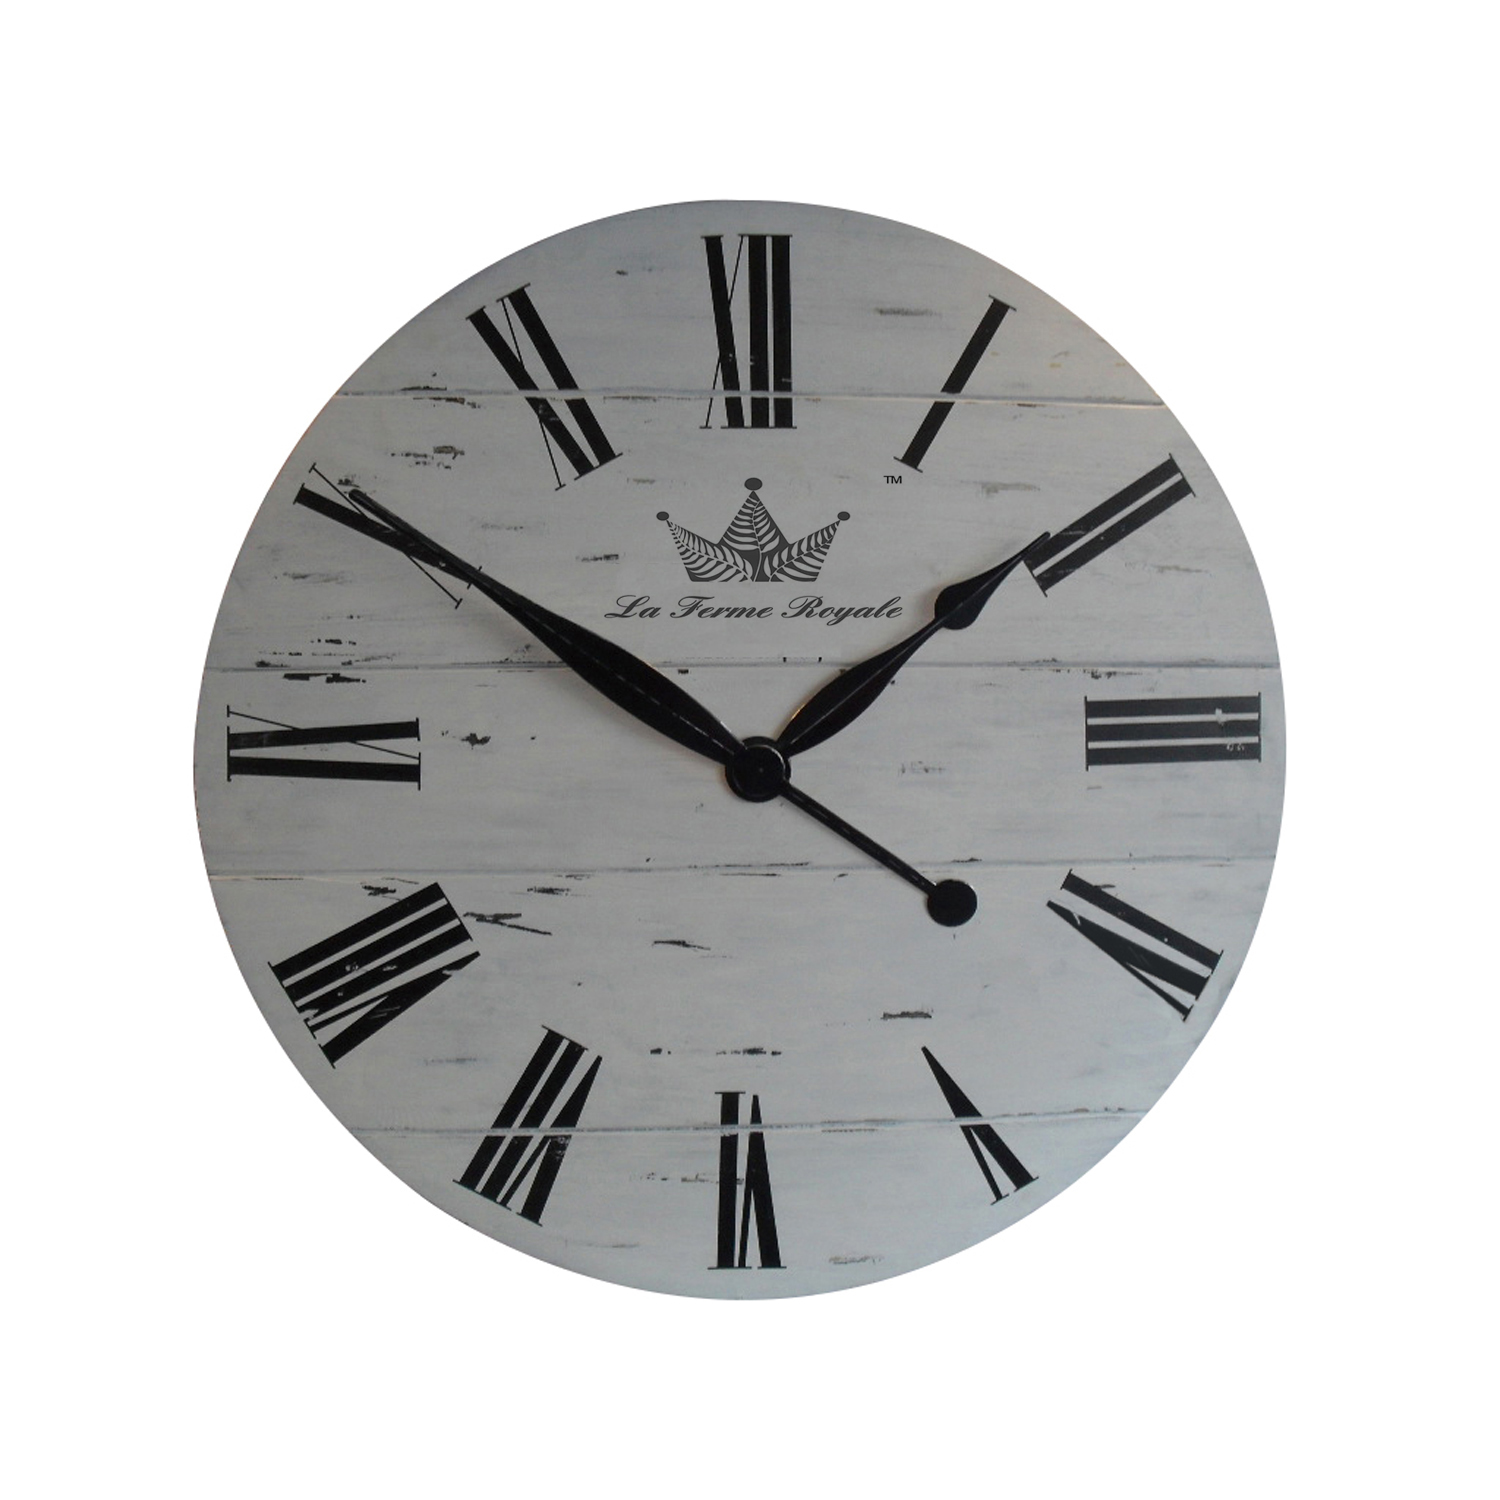 La Ferme Royale wall clock